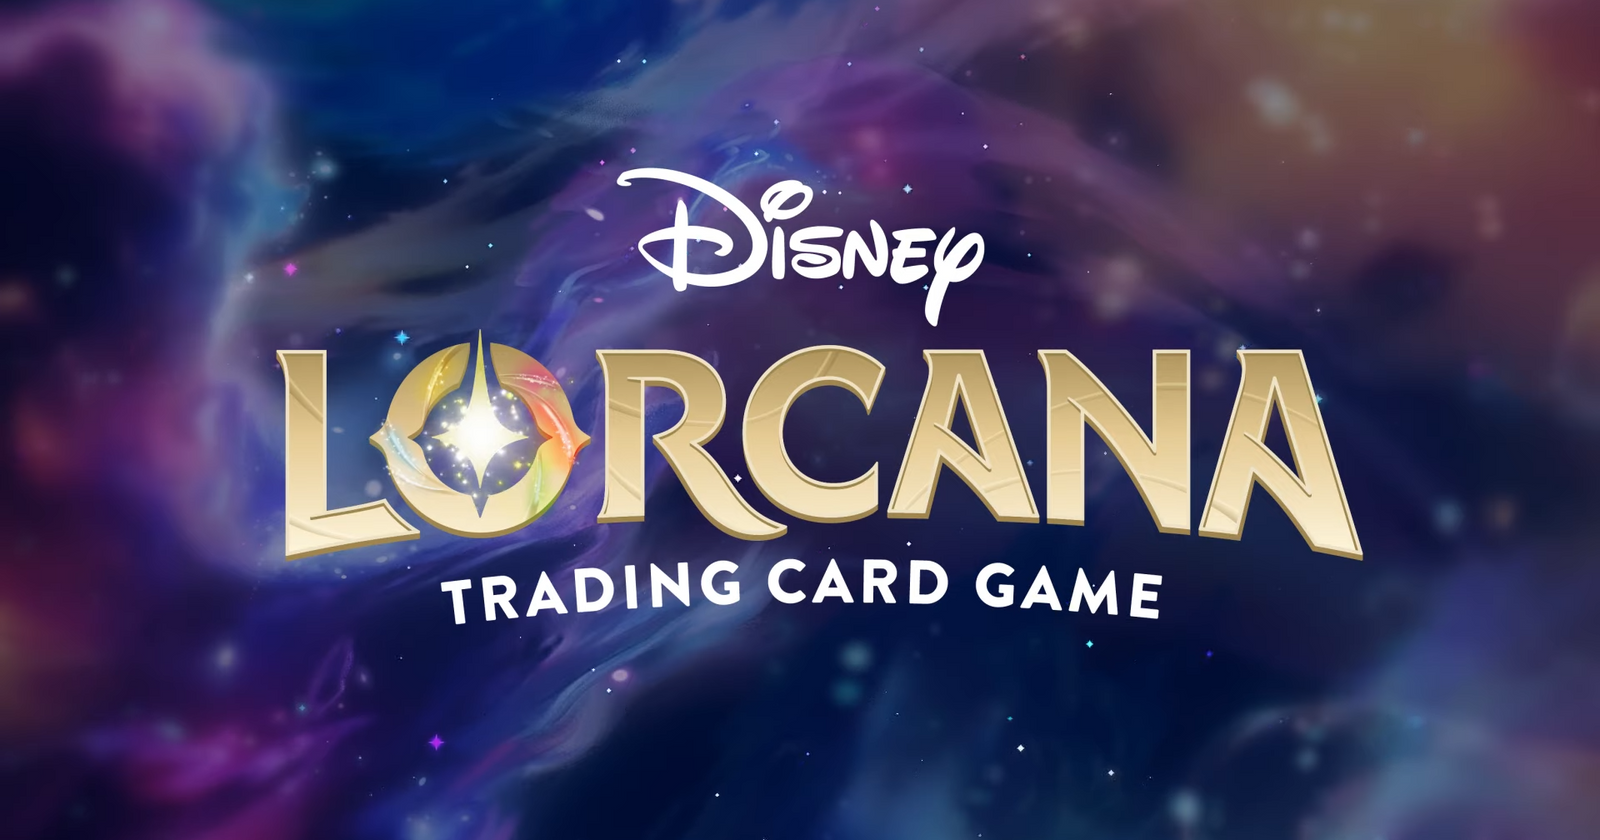 Disney Lorcana TCG's rules - how to play and win